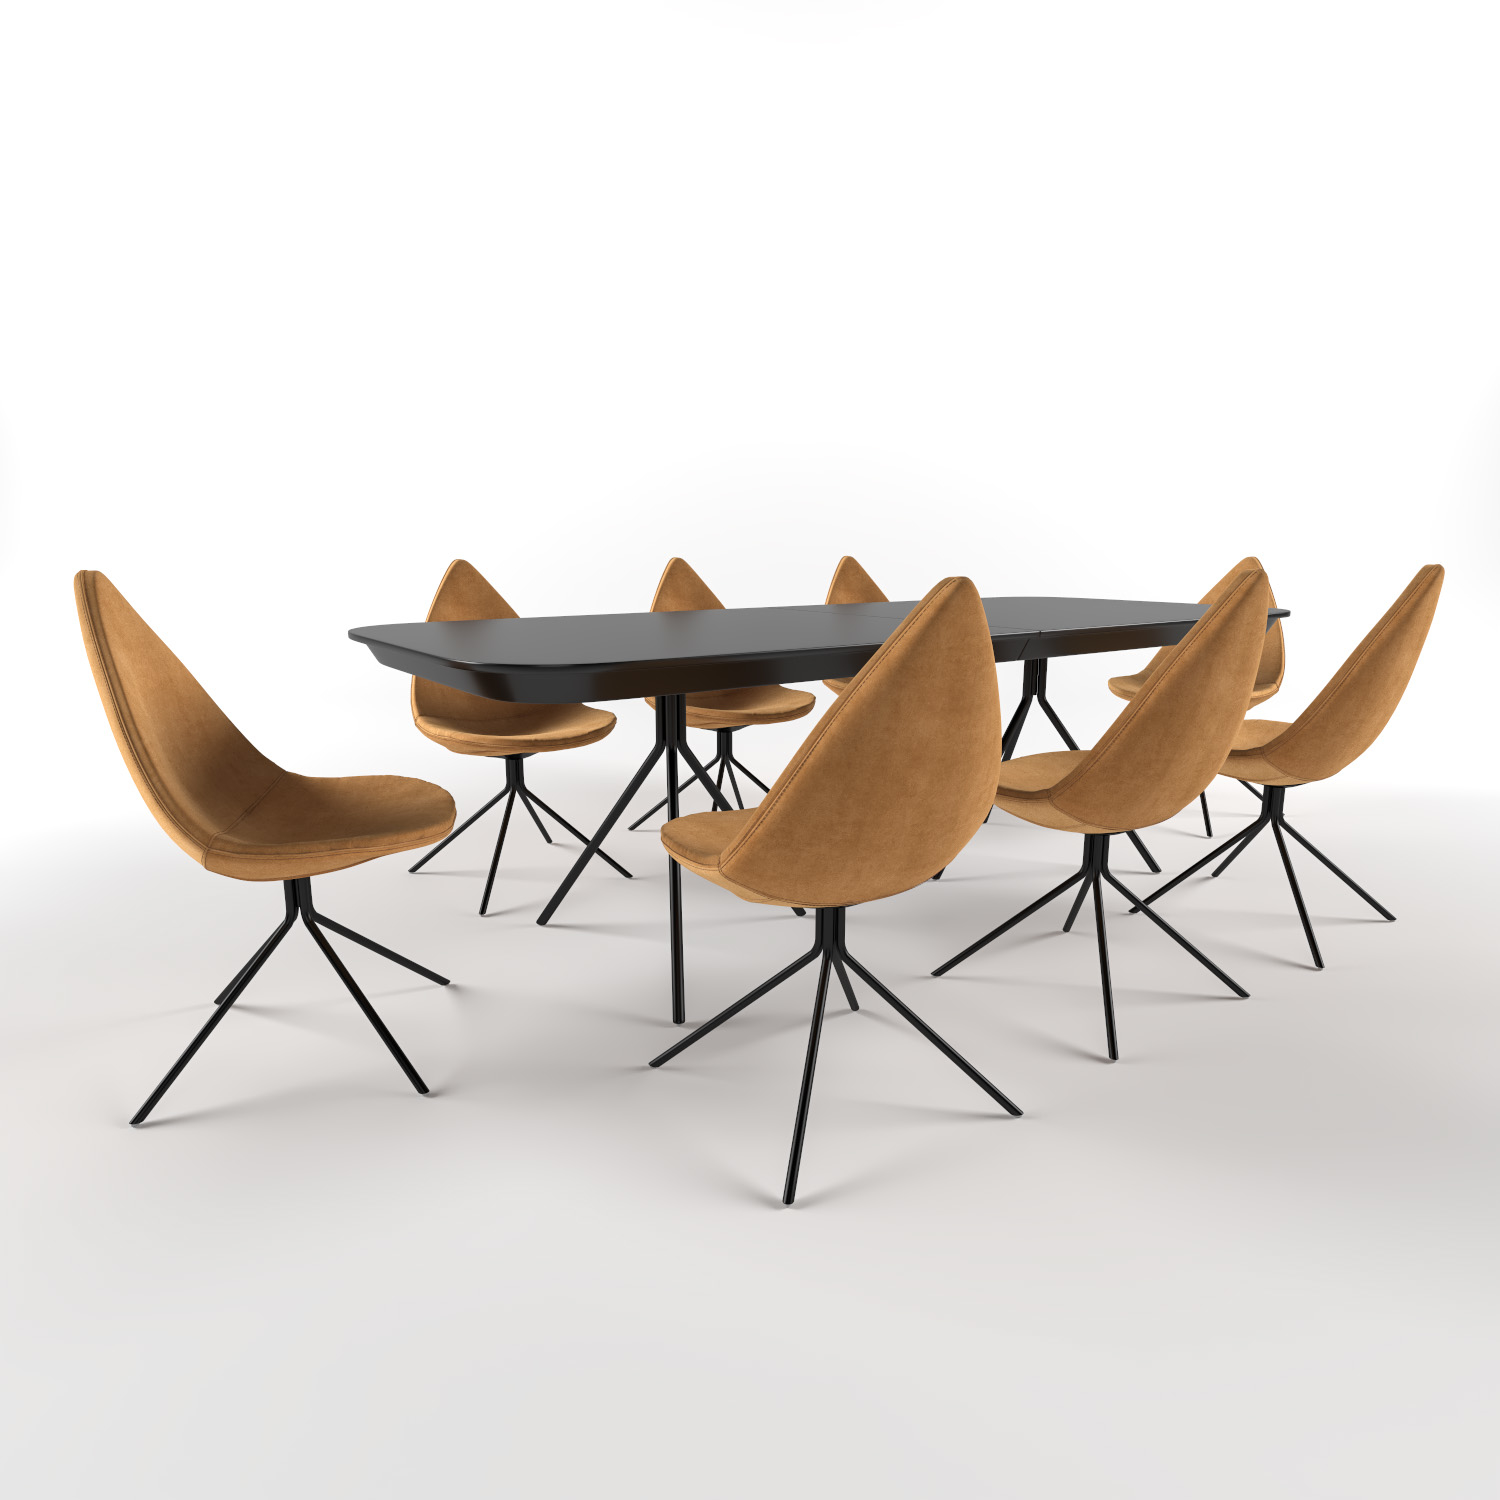 Attawa Table Chair Boconcept 3d Model Turbosquid 1432036